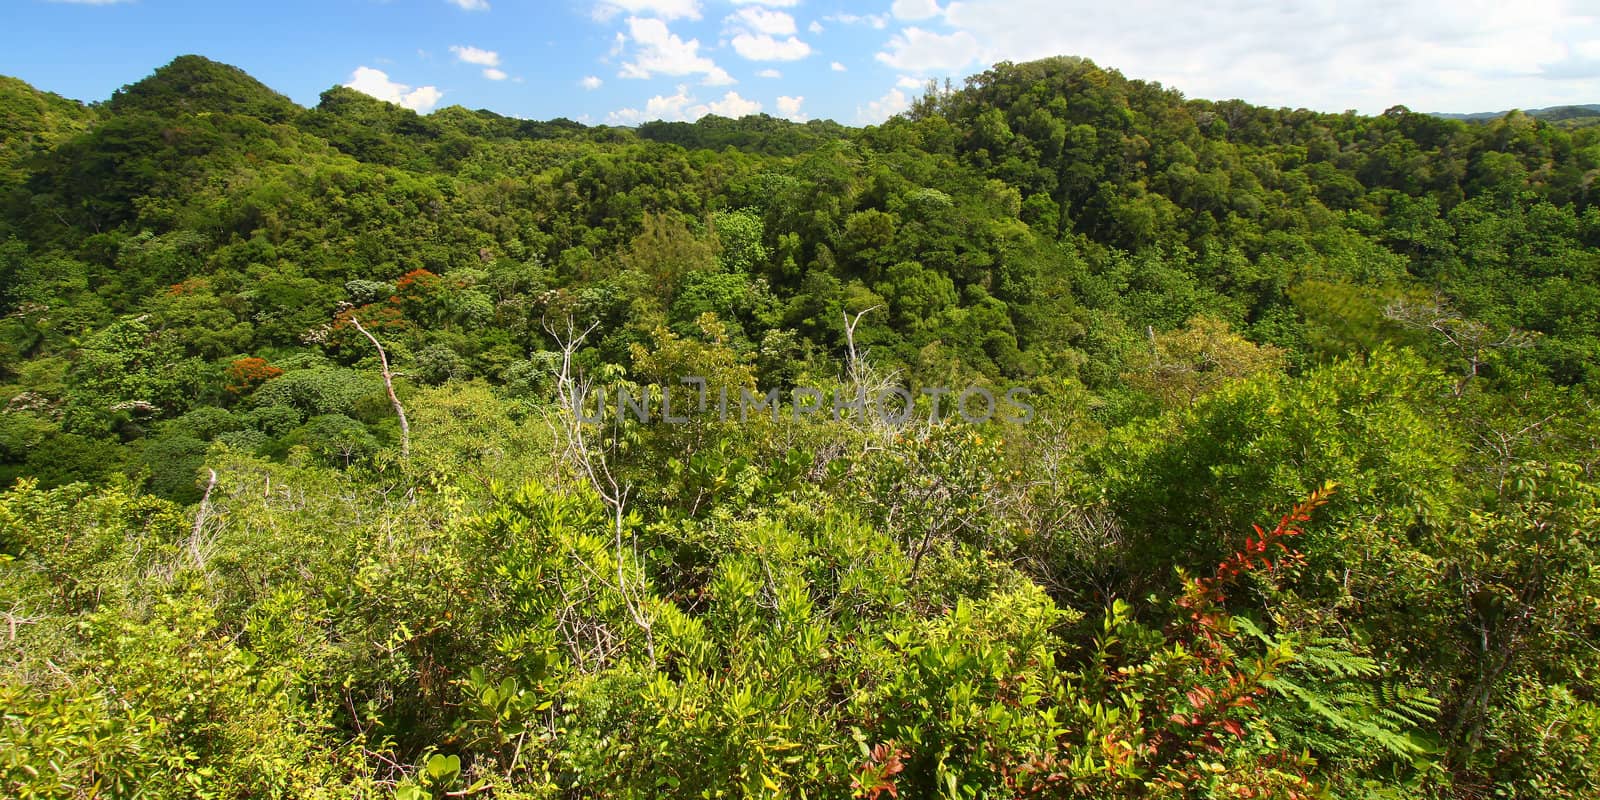 Dense vegetation of Guajataca Forest Reserve in Puerto Rico.